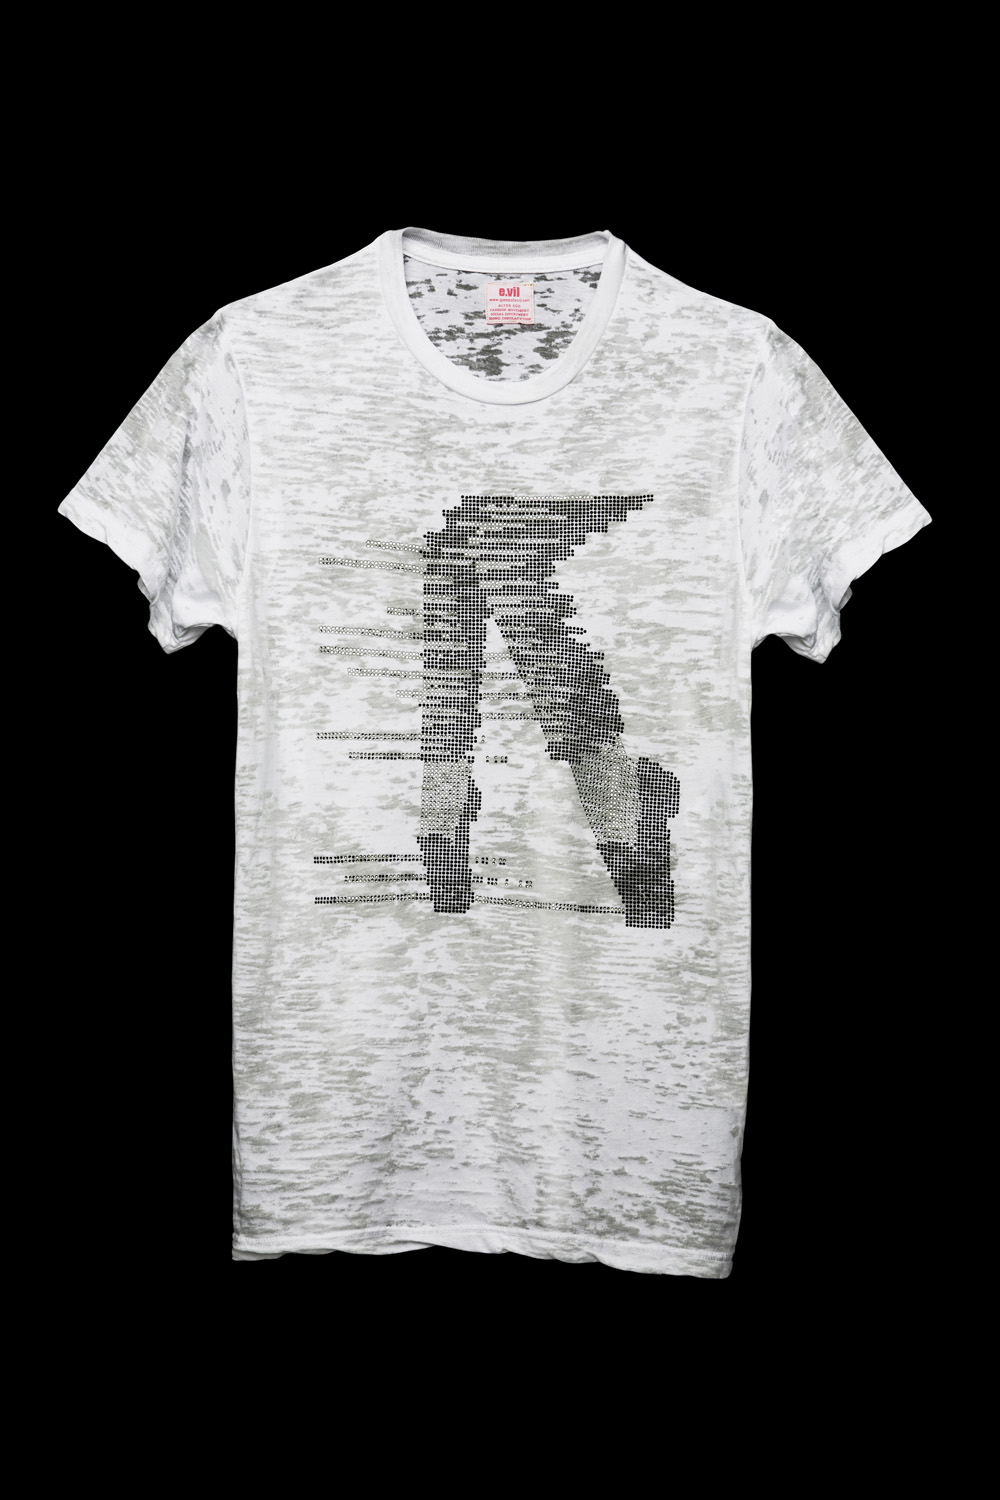 Michael Jackson’s Moonwalk T-Shirt at Intermix